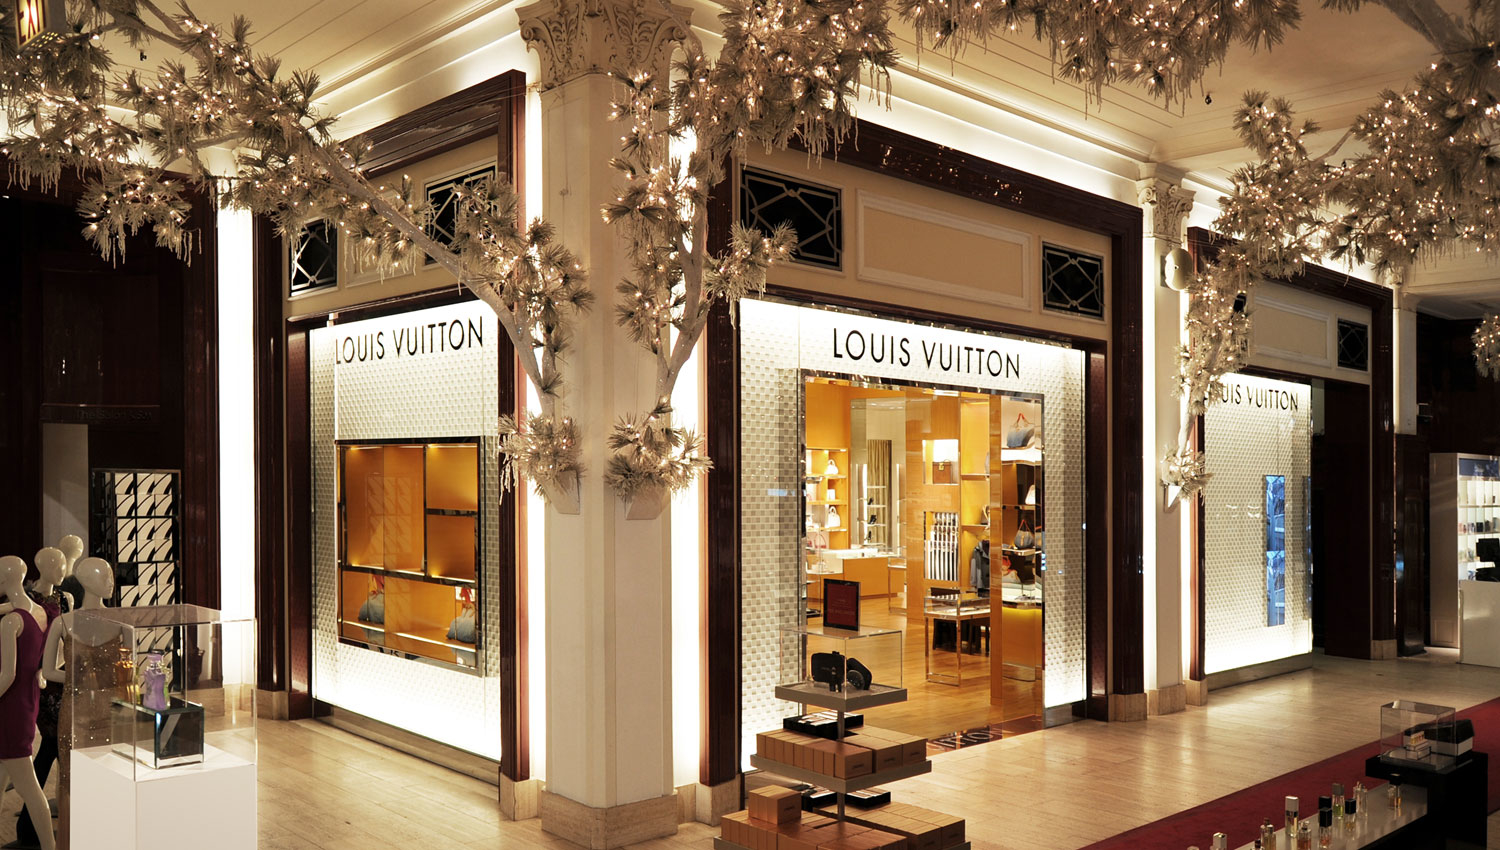 Louis Vuitton New York Saks Fifth Ave, New York New York (NY) - www.strongerinc.org